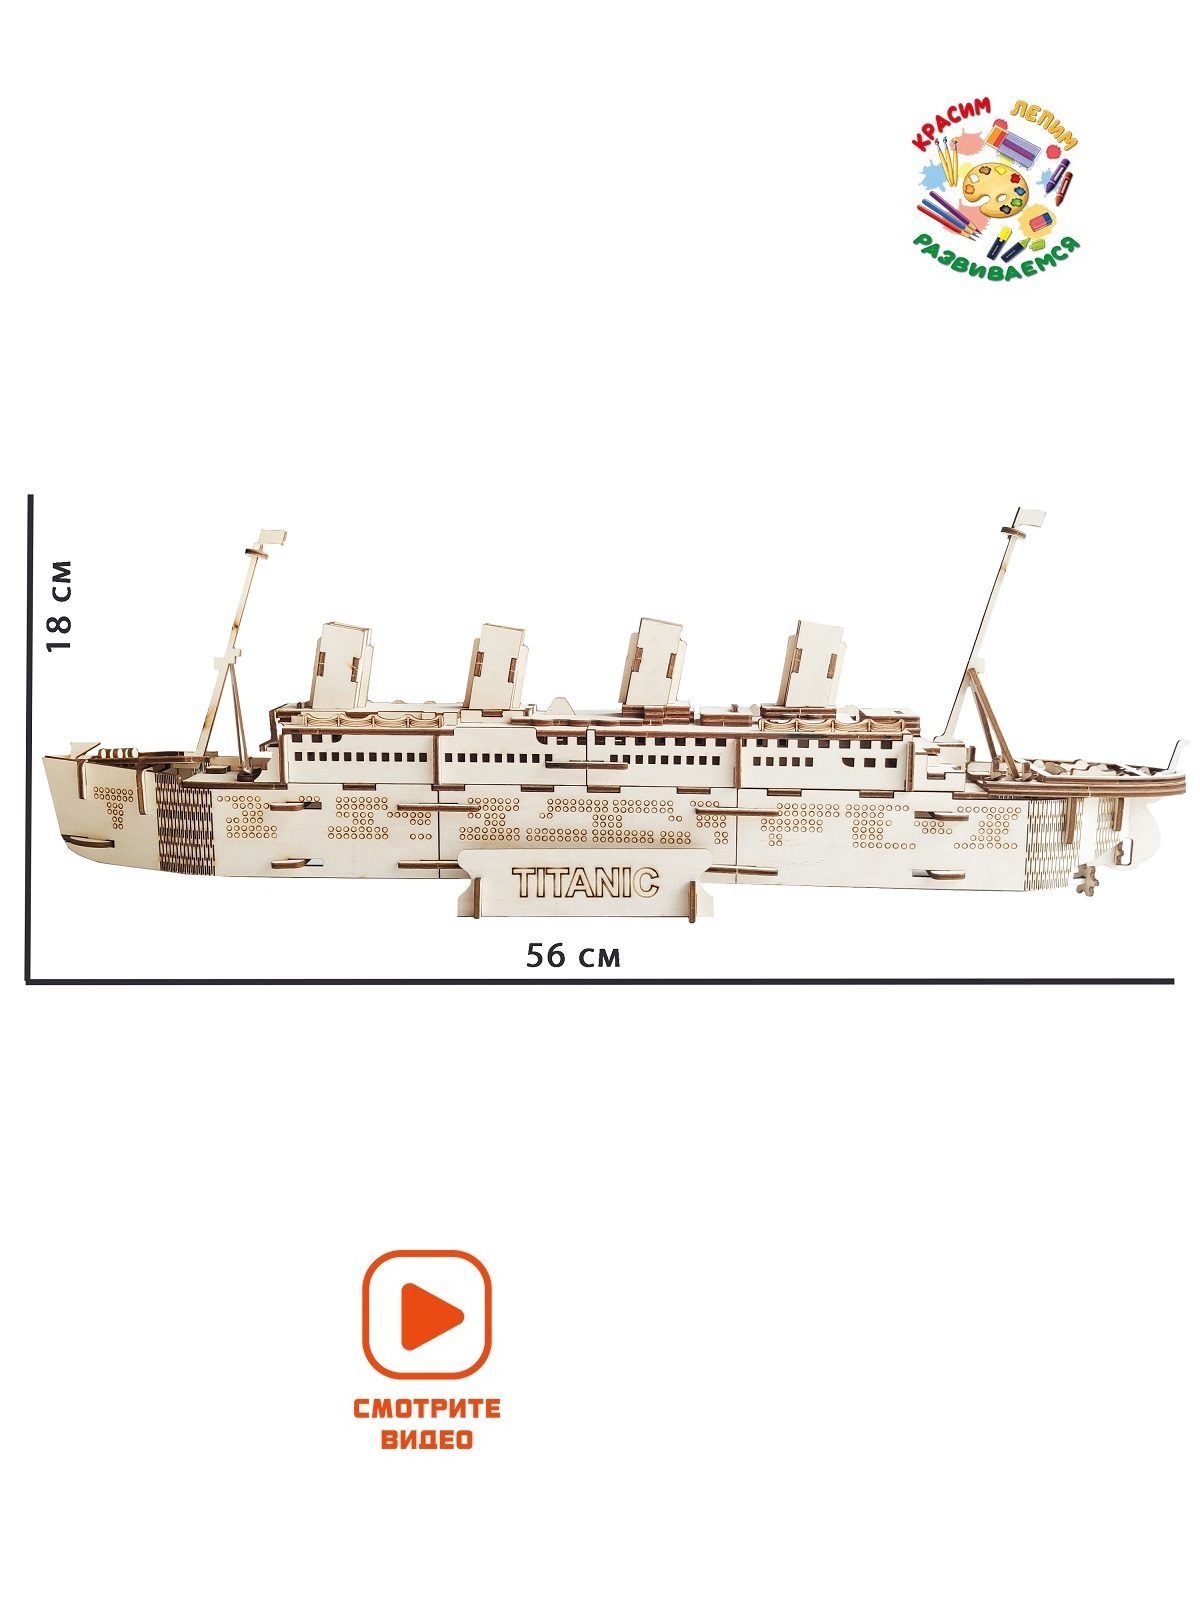 Titanic - Страница 2 - Модели из бумаги и картона своими руками - Форум